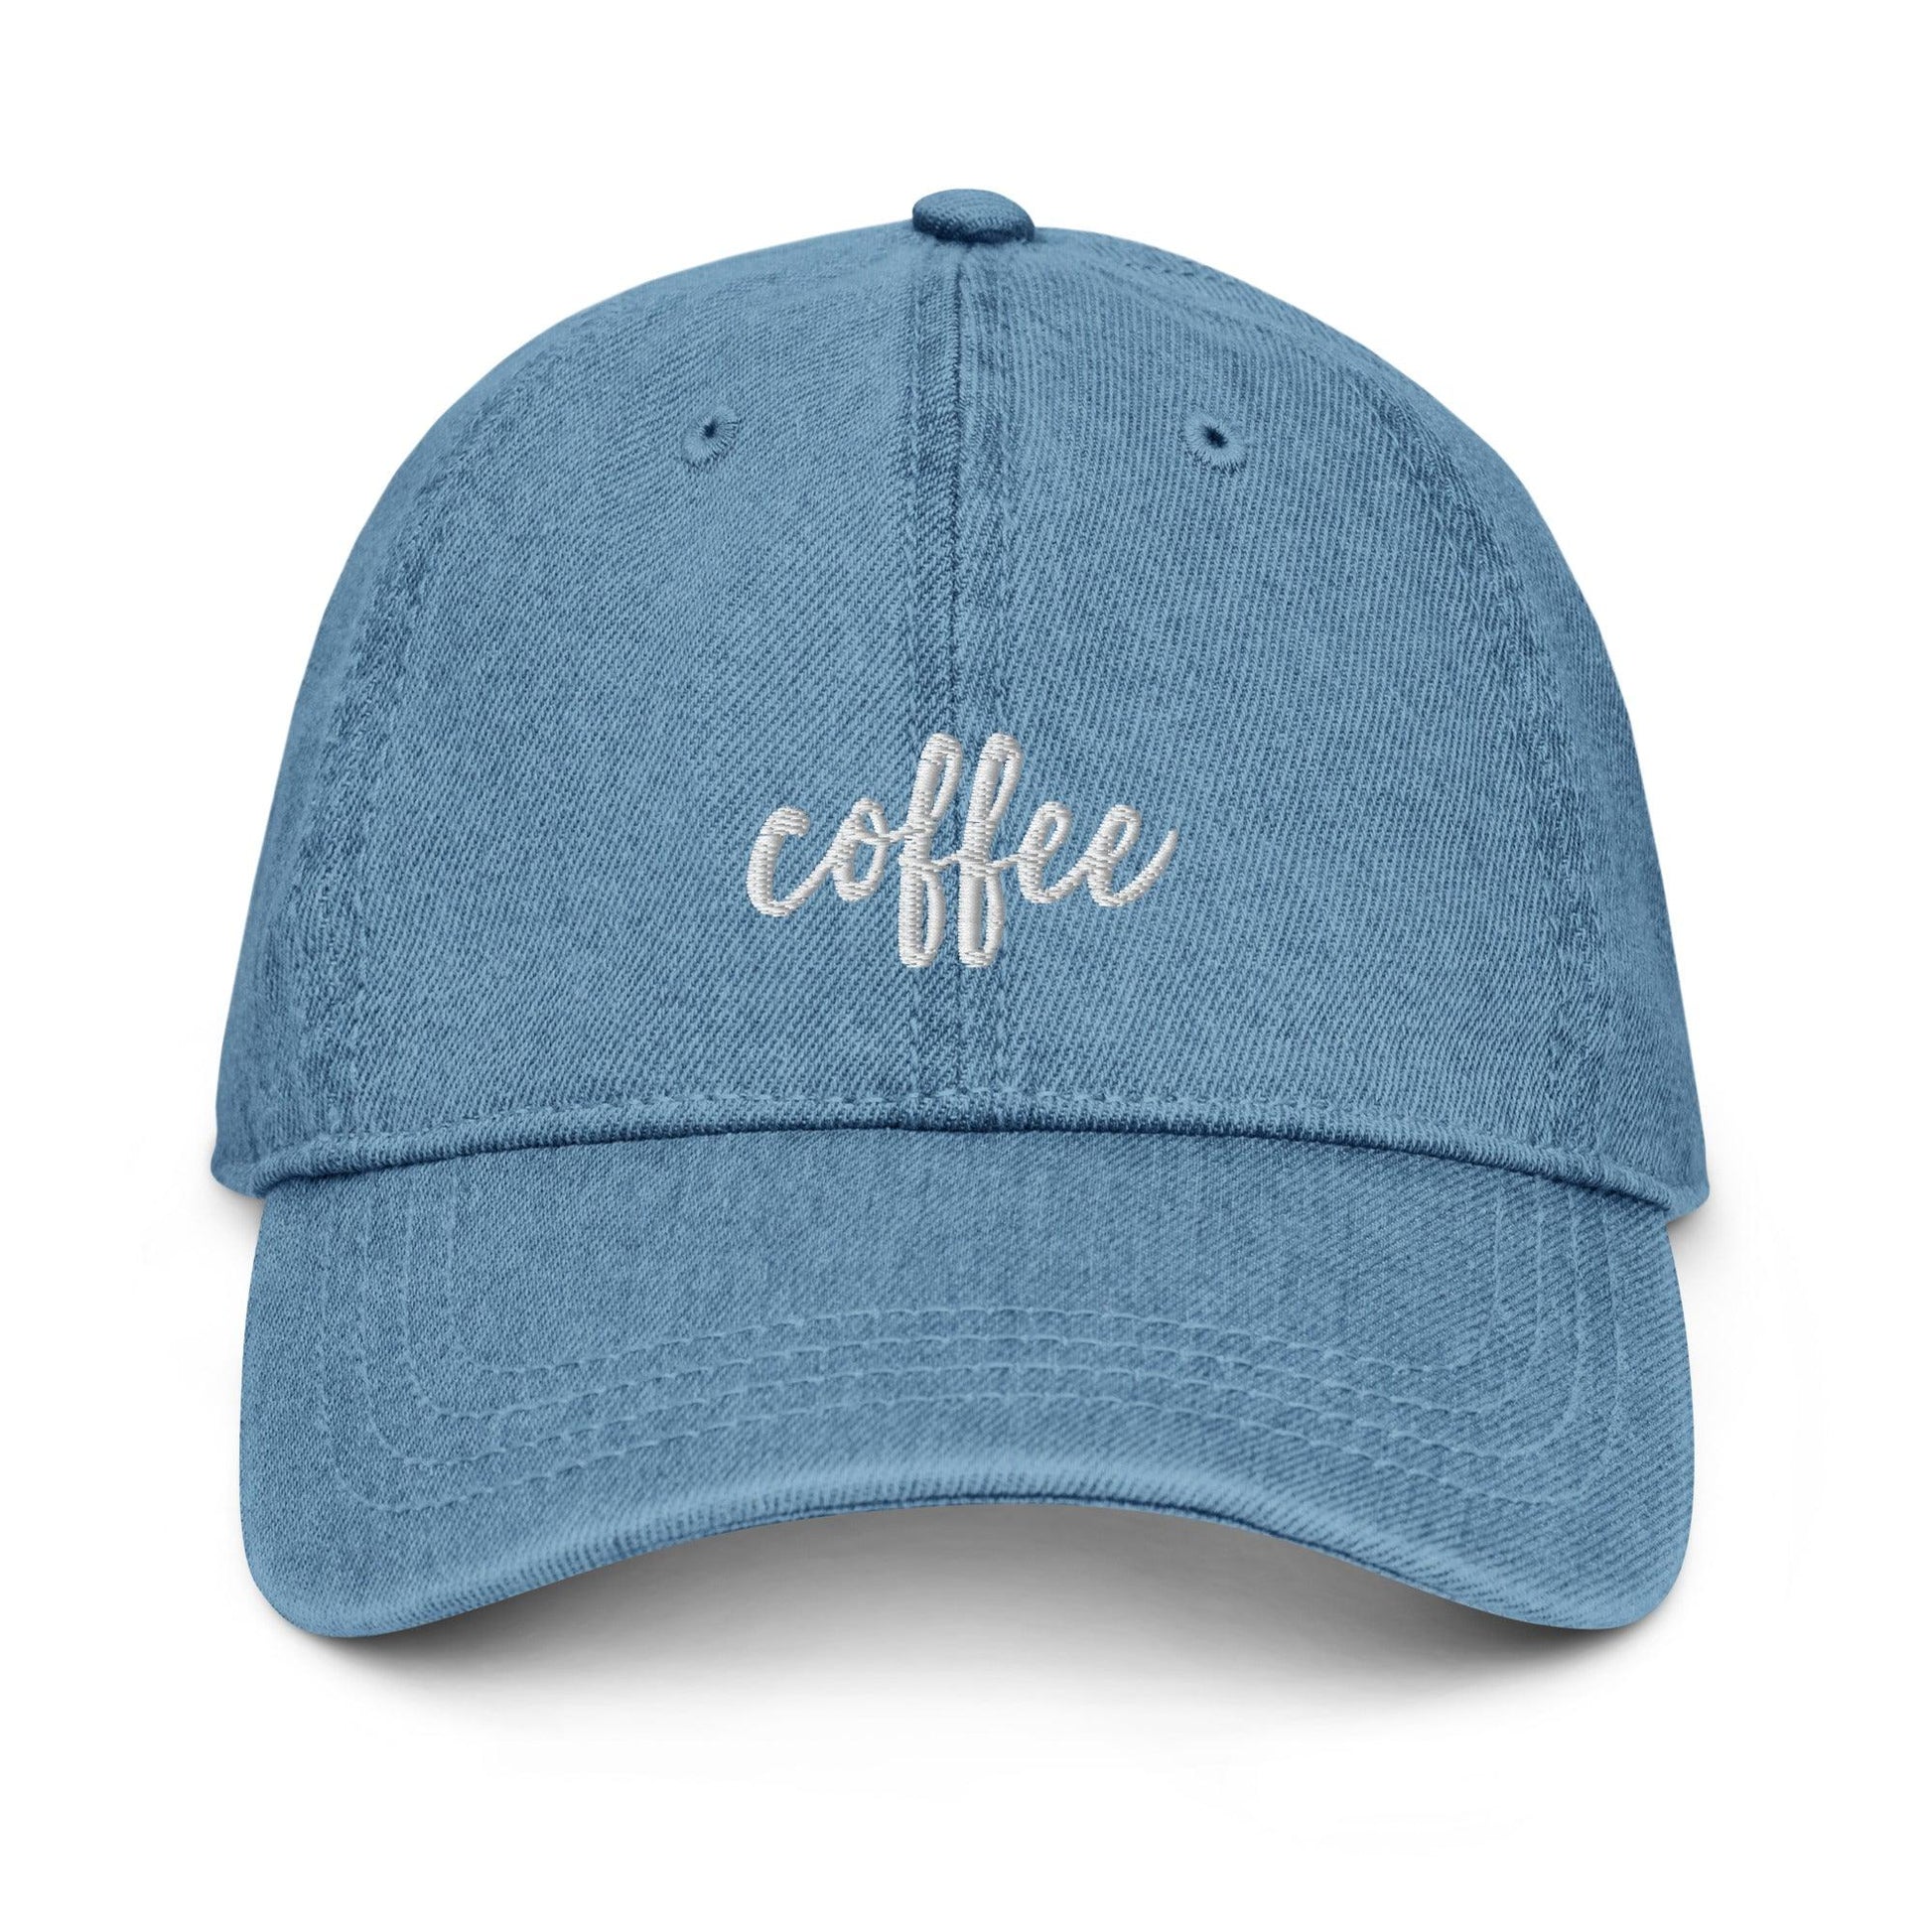 Coffee Embroidered Denim Hat - Aperture Coffee